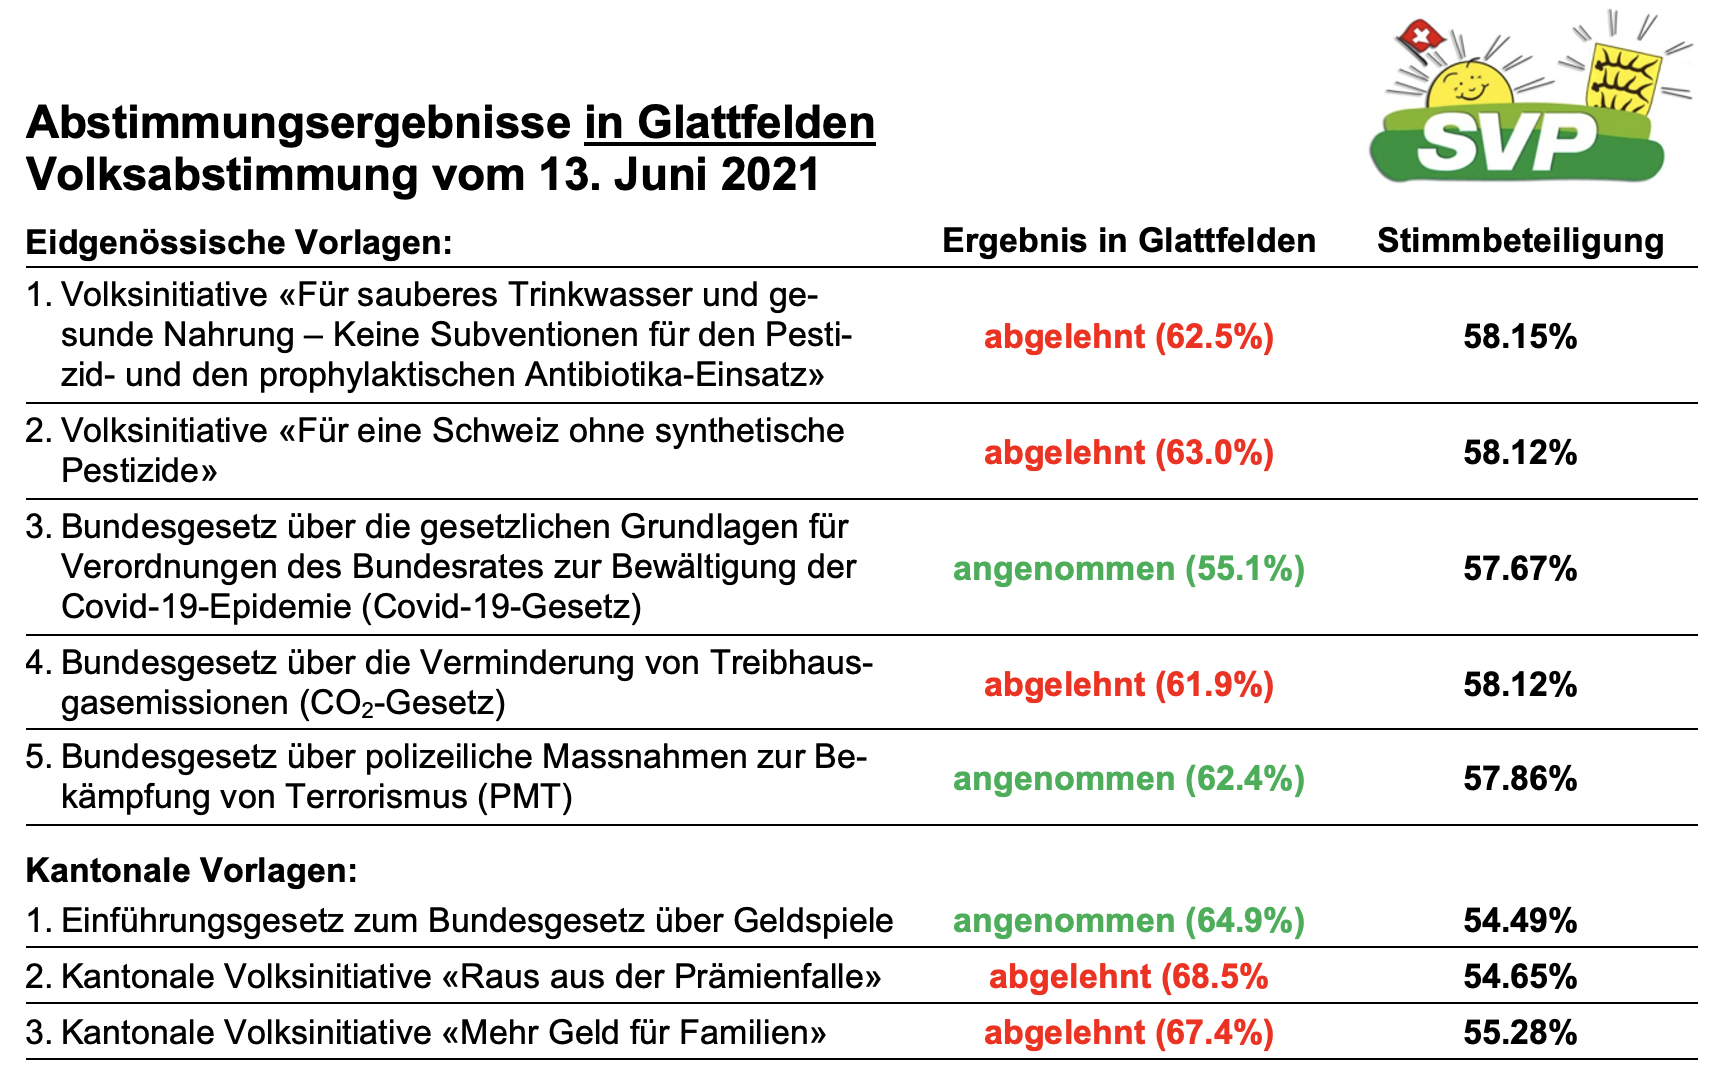 Glattfelder Abstimmungsergebnisse - Freude herrscht, danke Glattfelden!